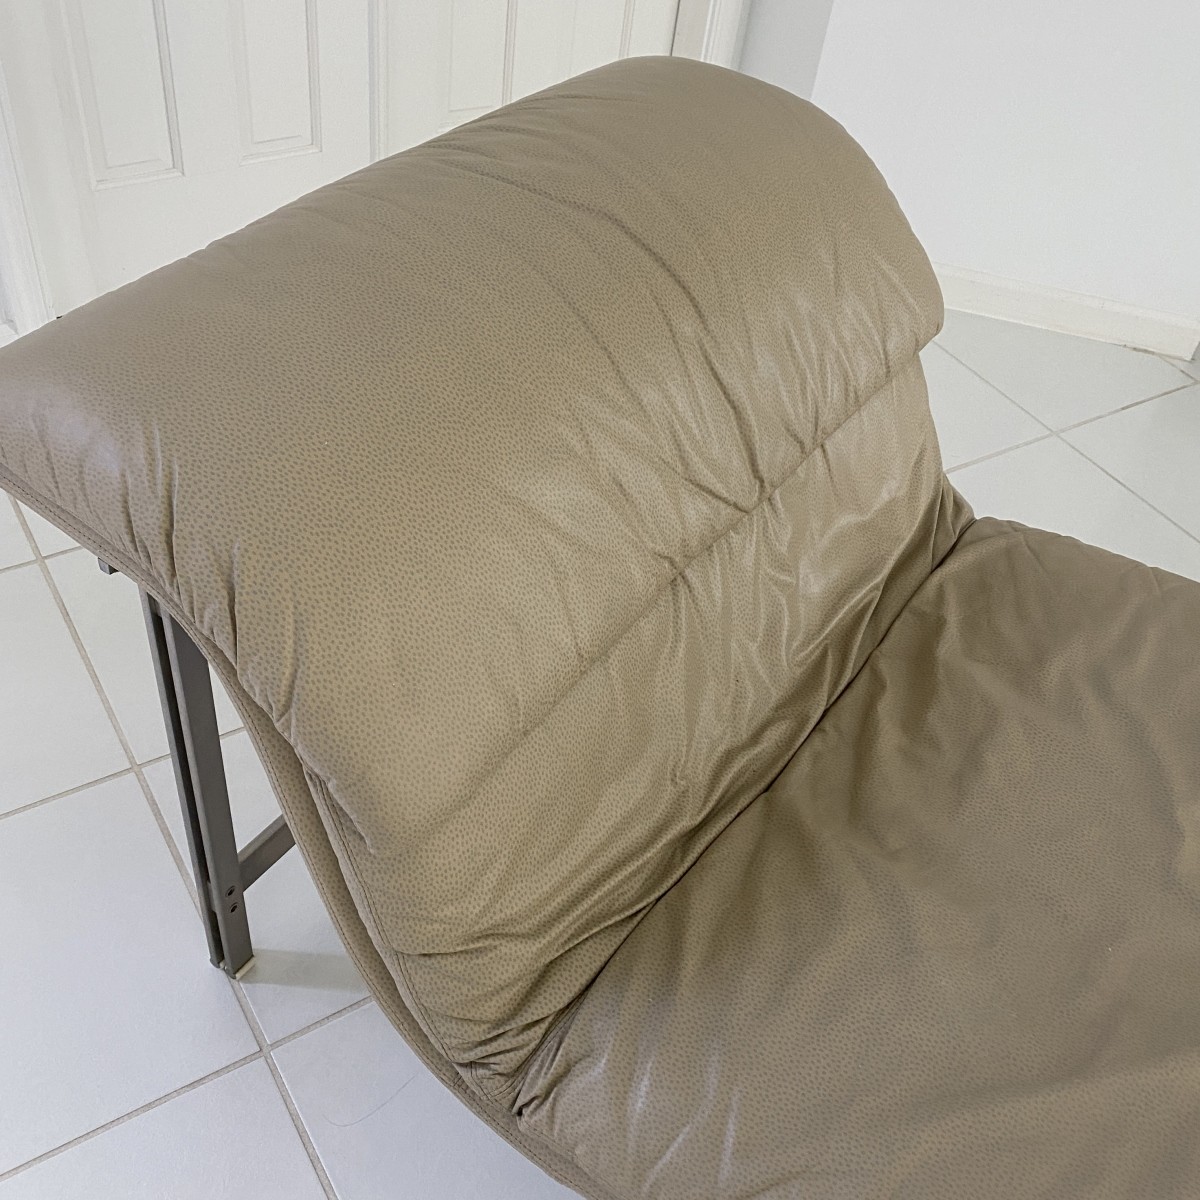 Saporiti Leather "Wave" Lounge Chair